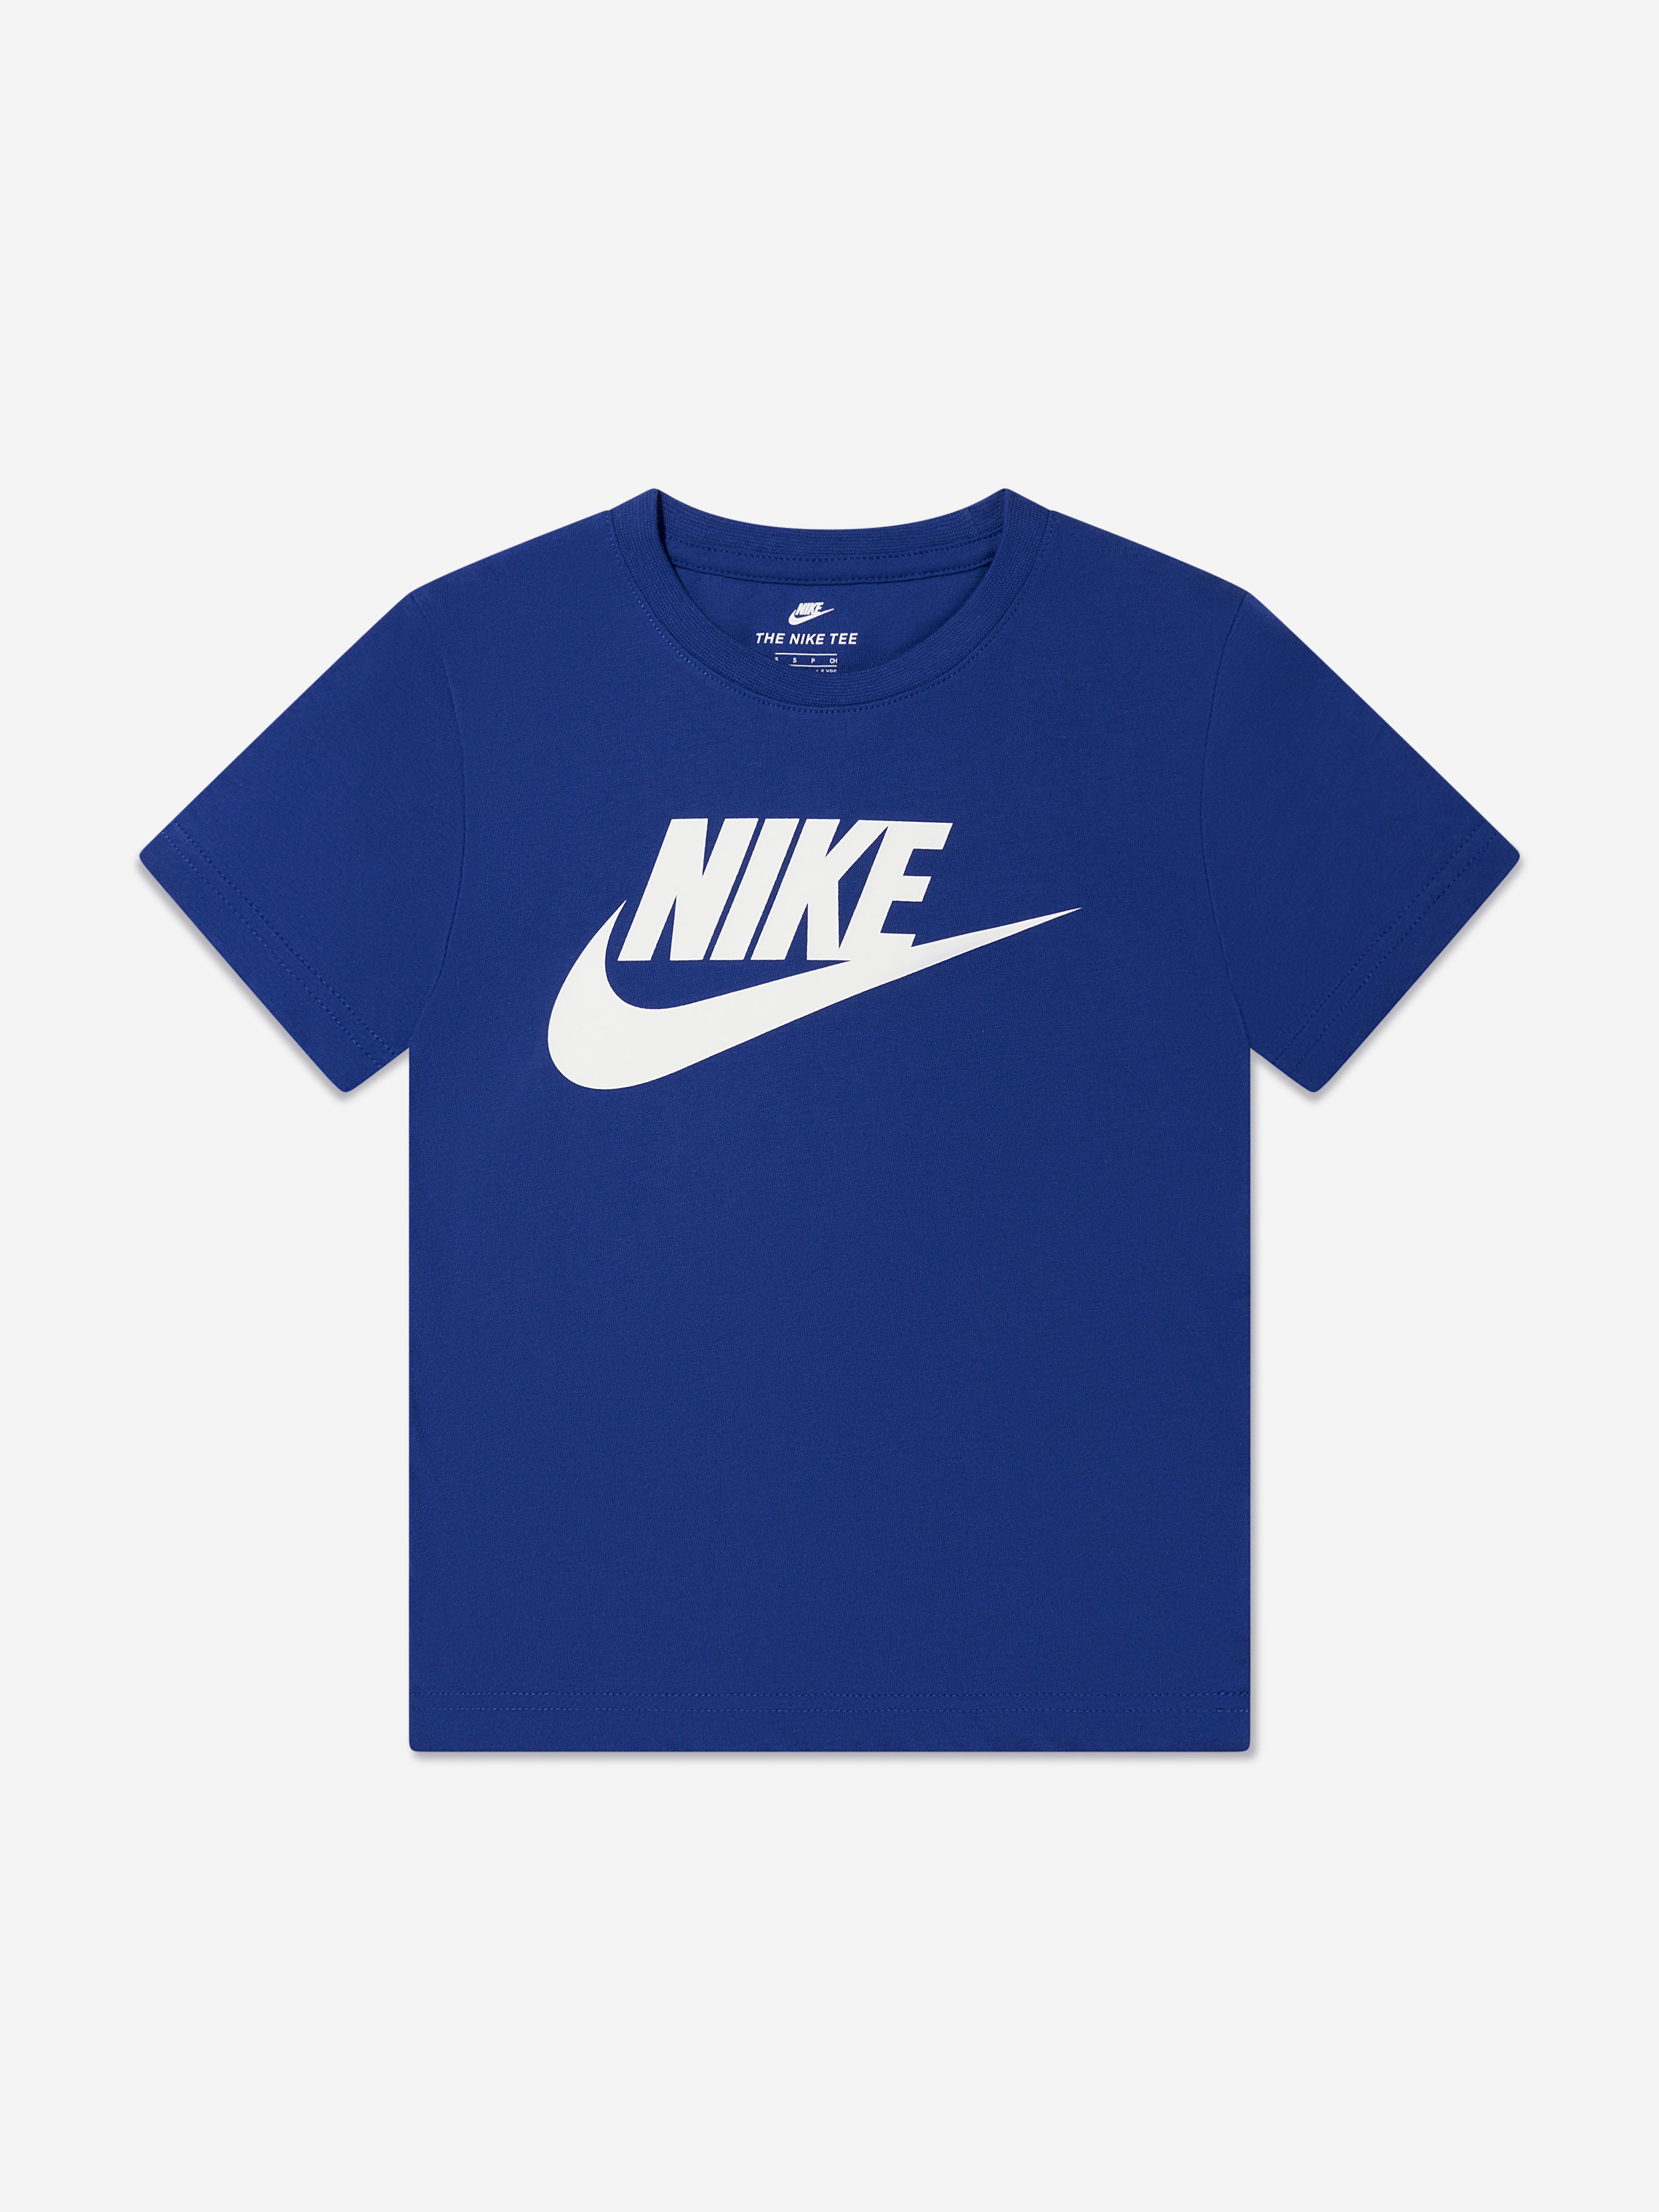 Nike Boys Cotton Jersey | T-Shirt Childsplay Clothing Logo